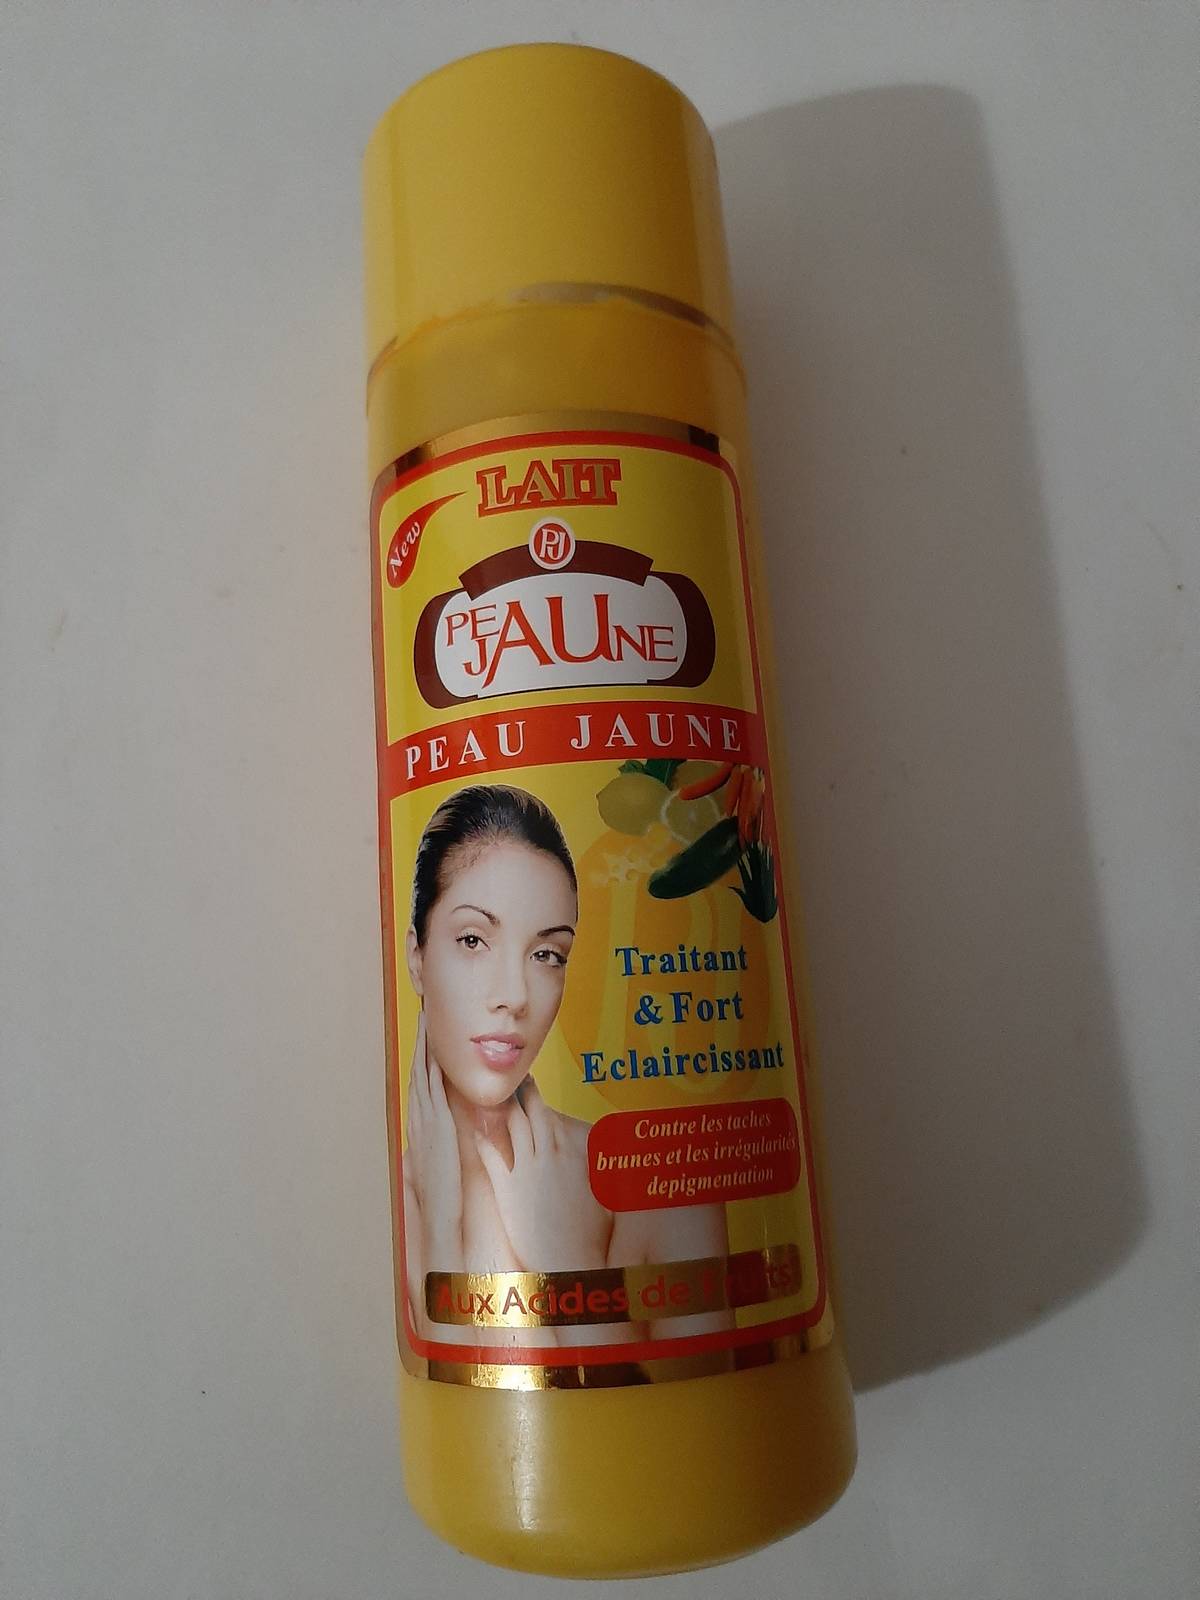 Peau jaune treating and lightening body lotion. 500ml